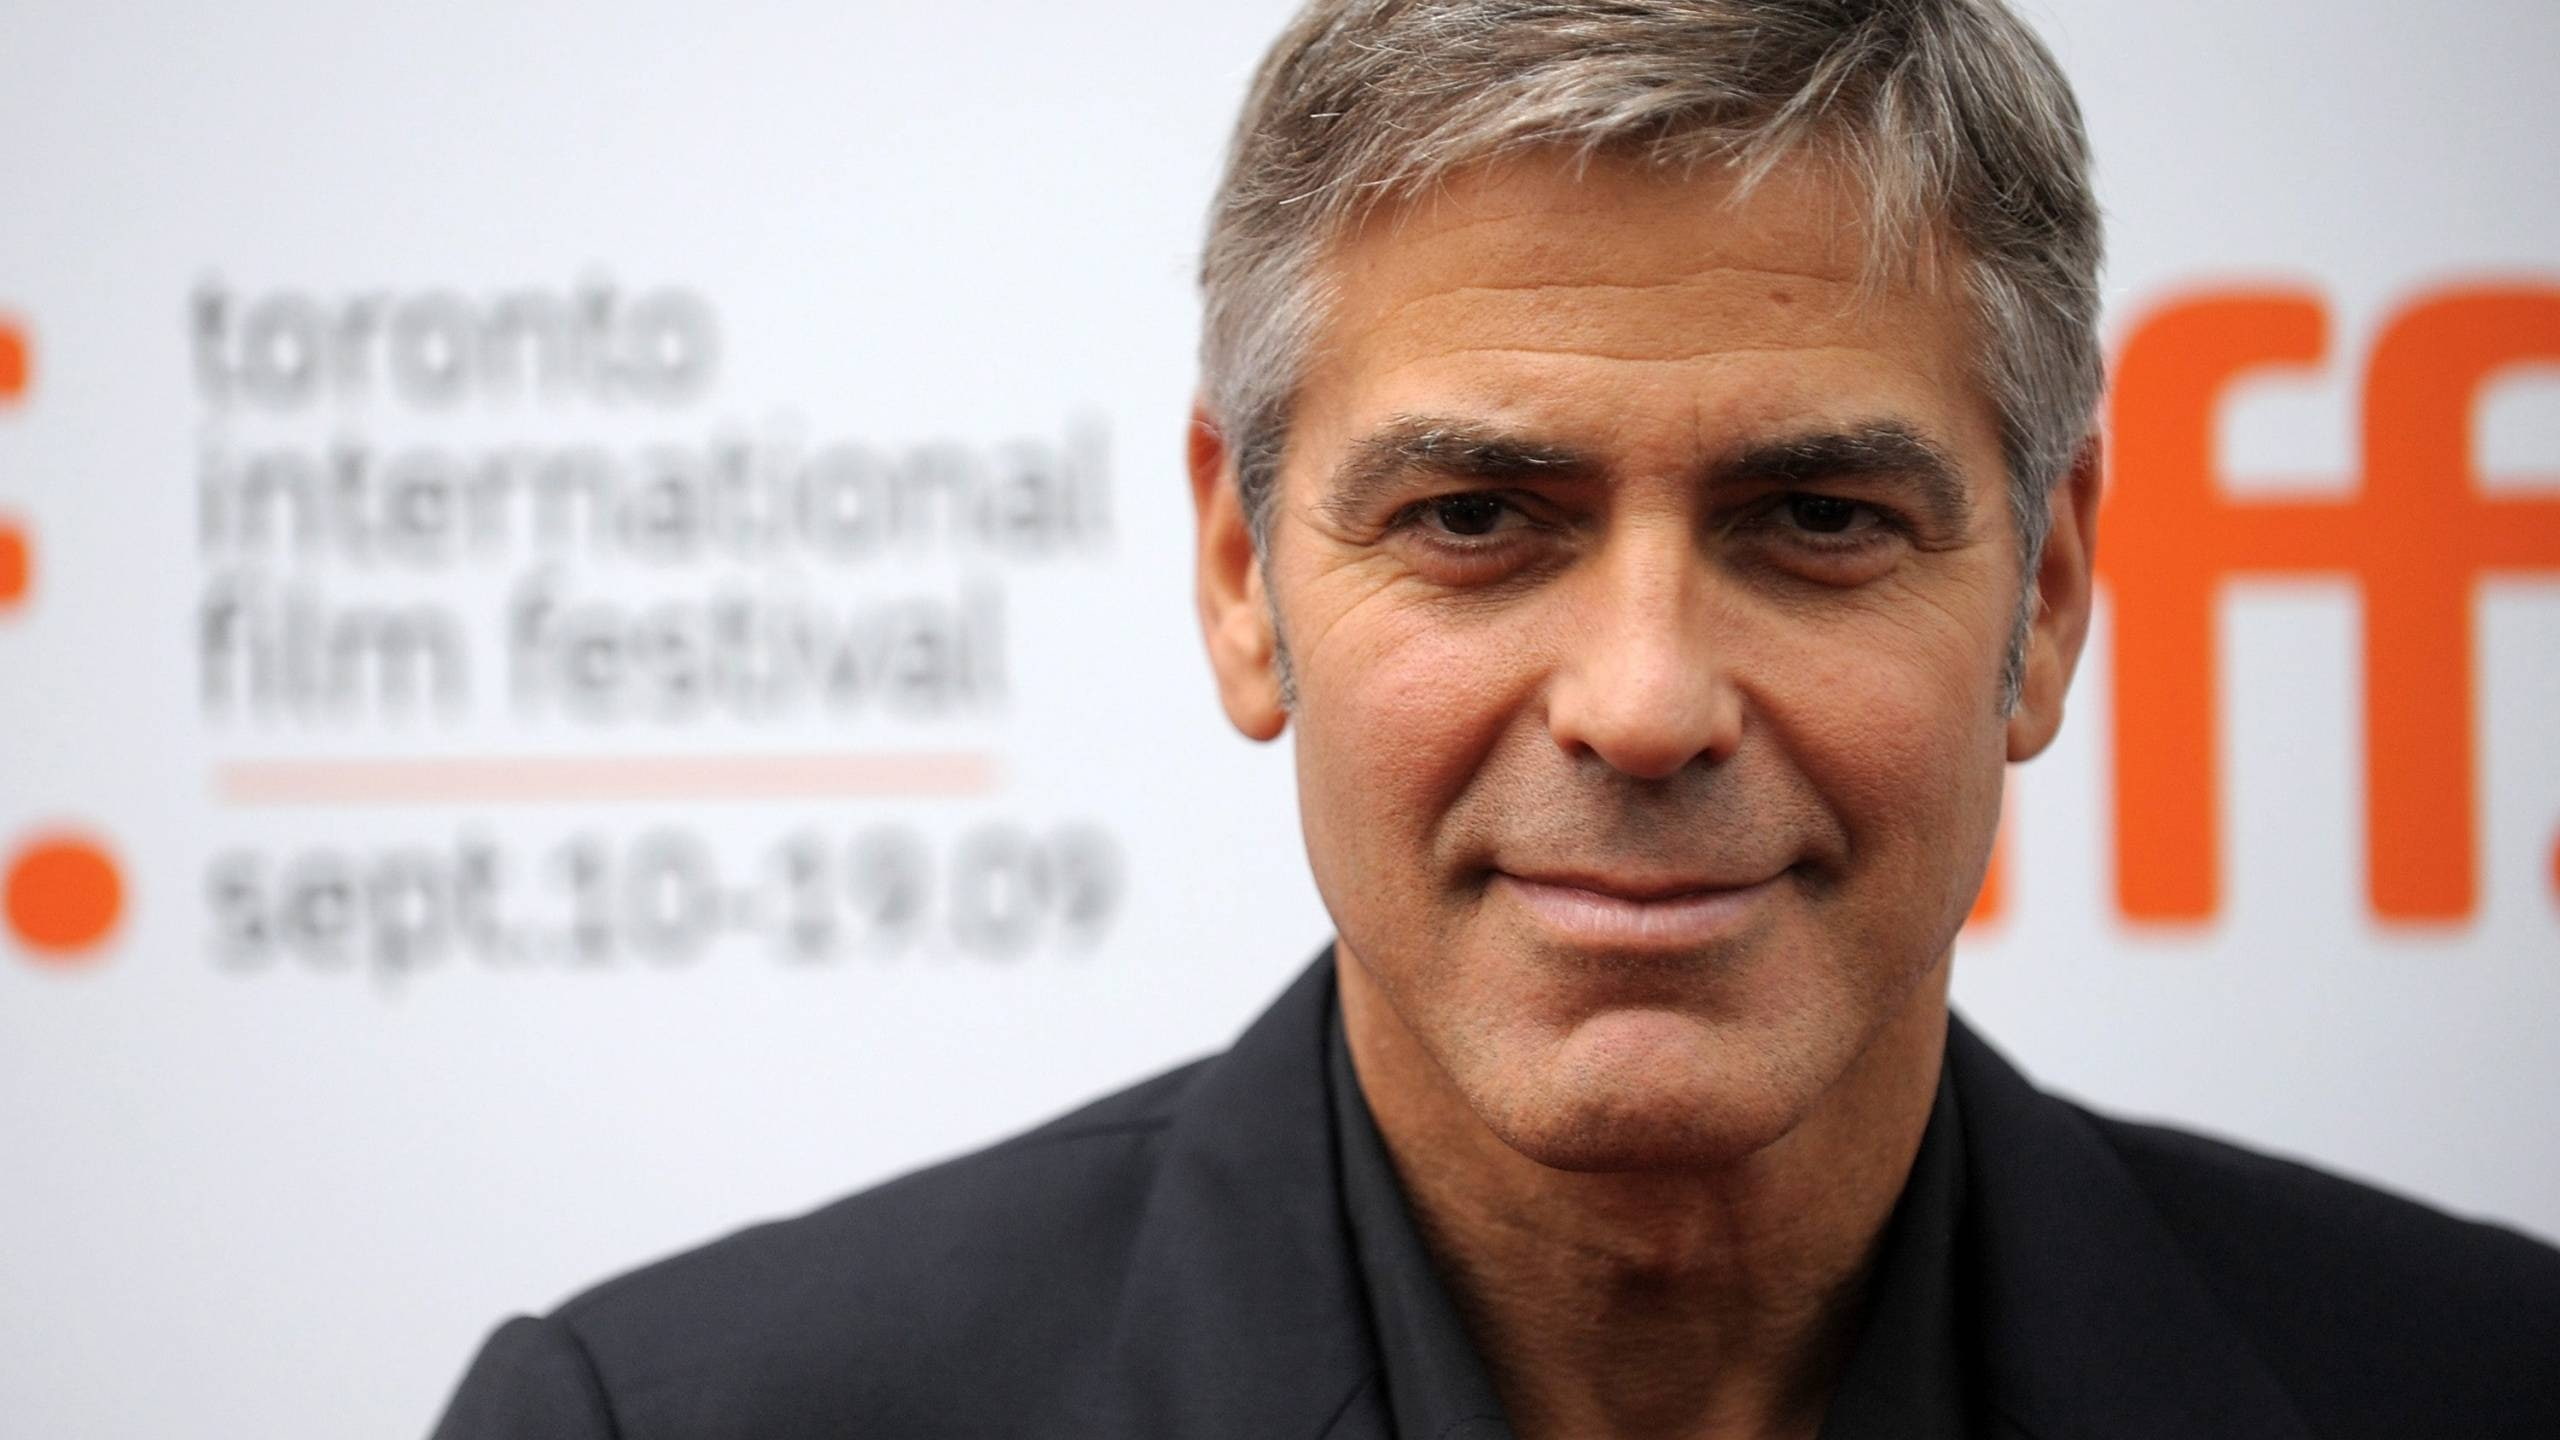 George Clooney Smile, man in black suit, actor, celeb, handsome